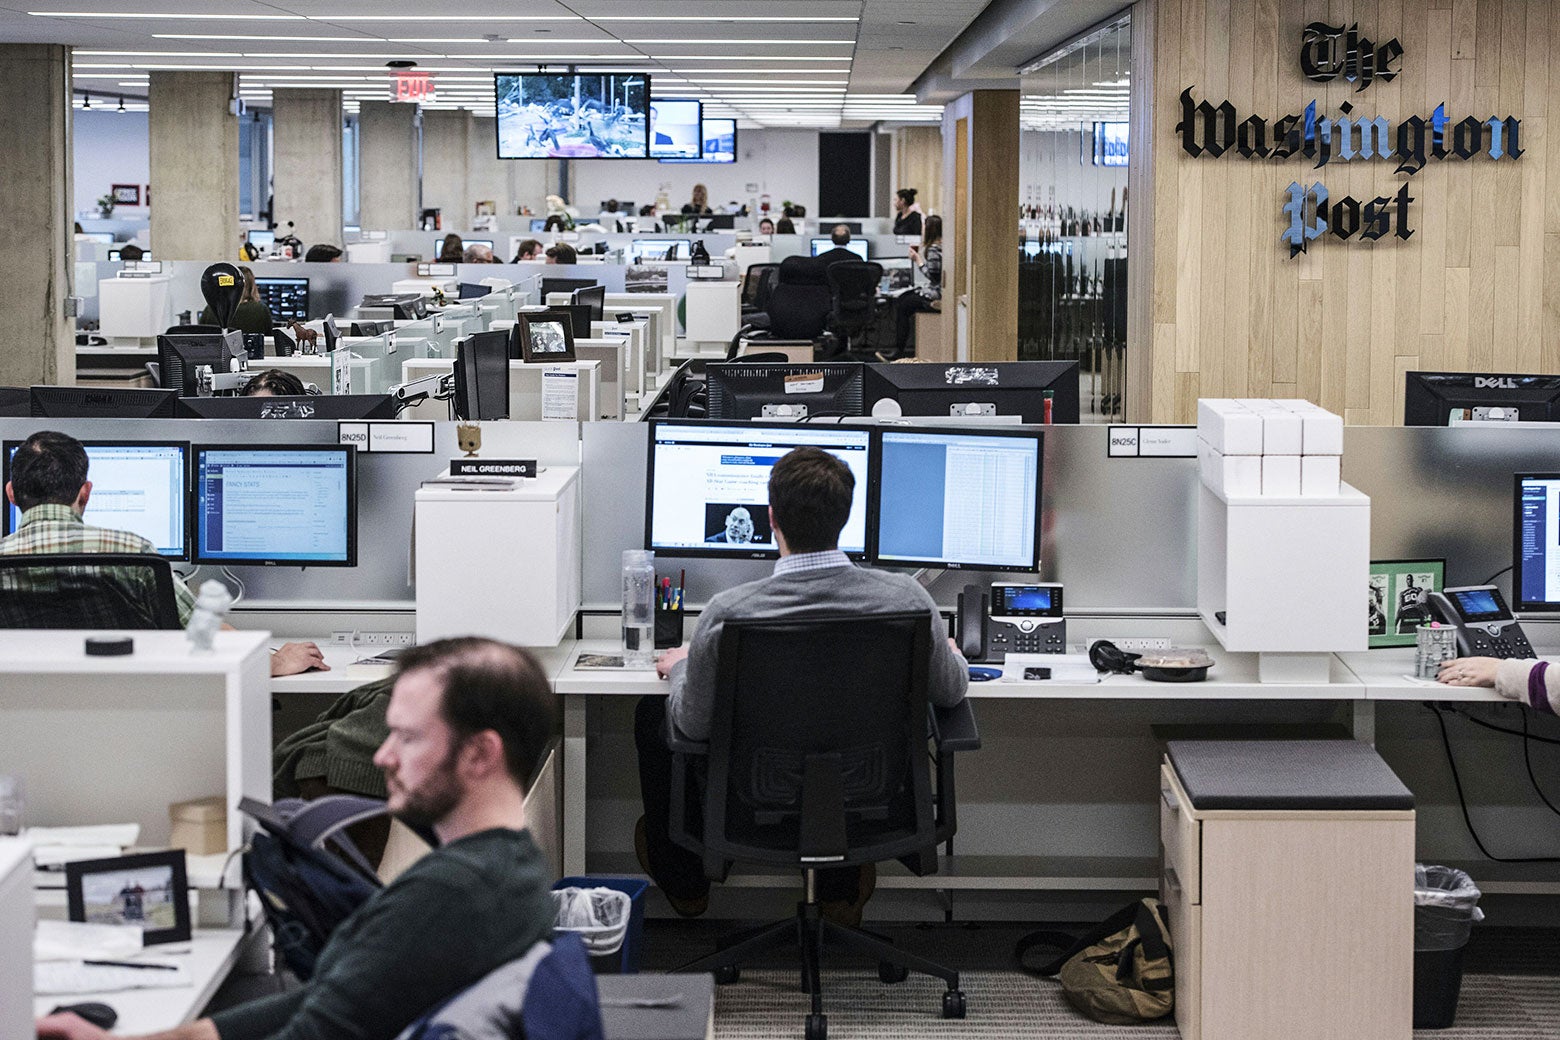 The Washington Post newsroom.